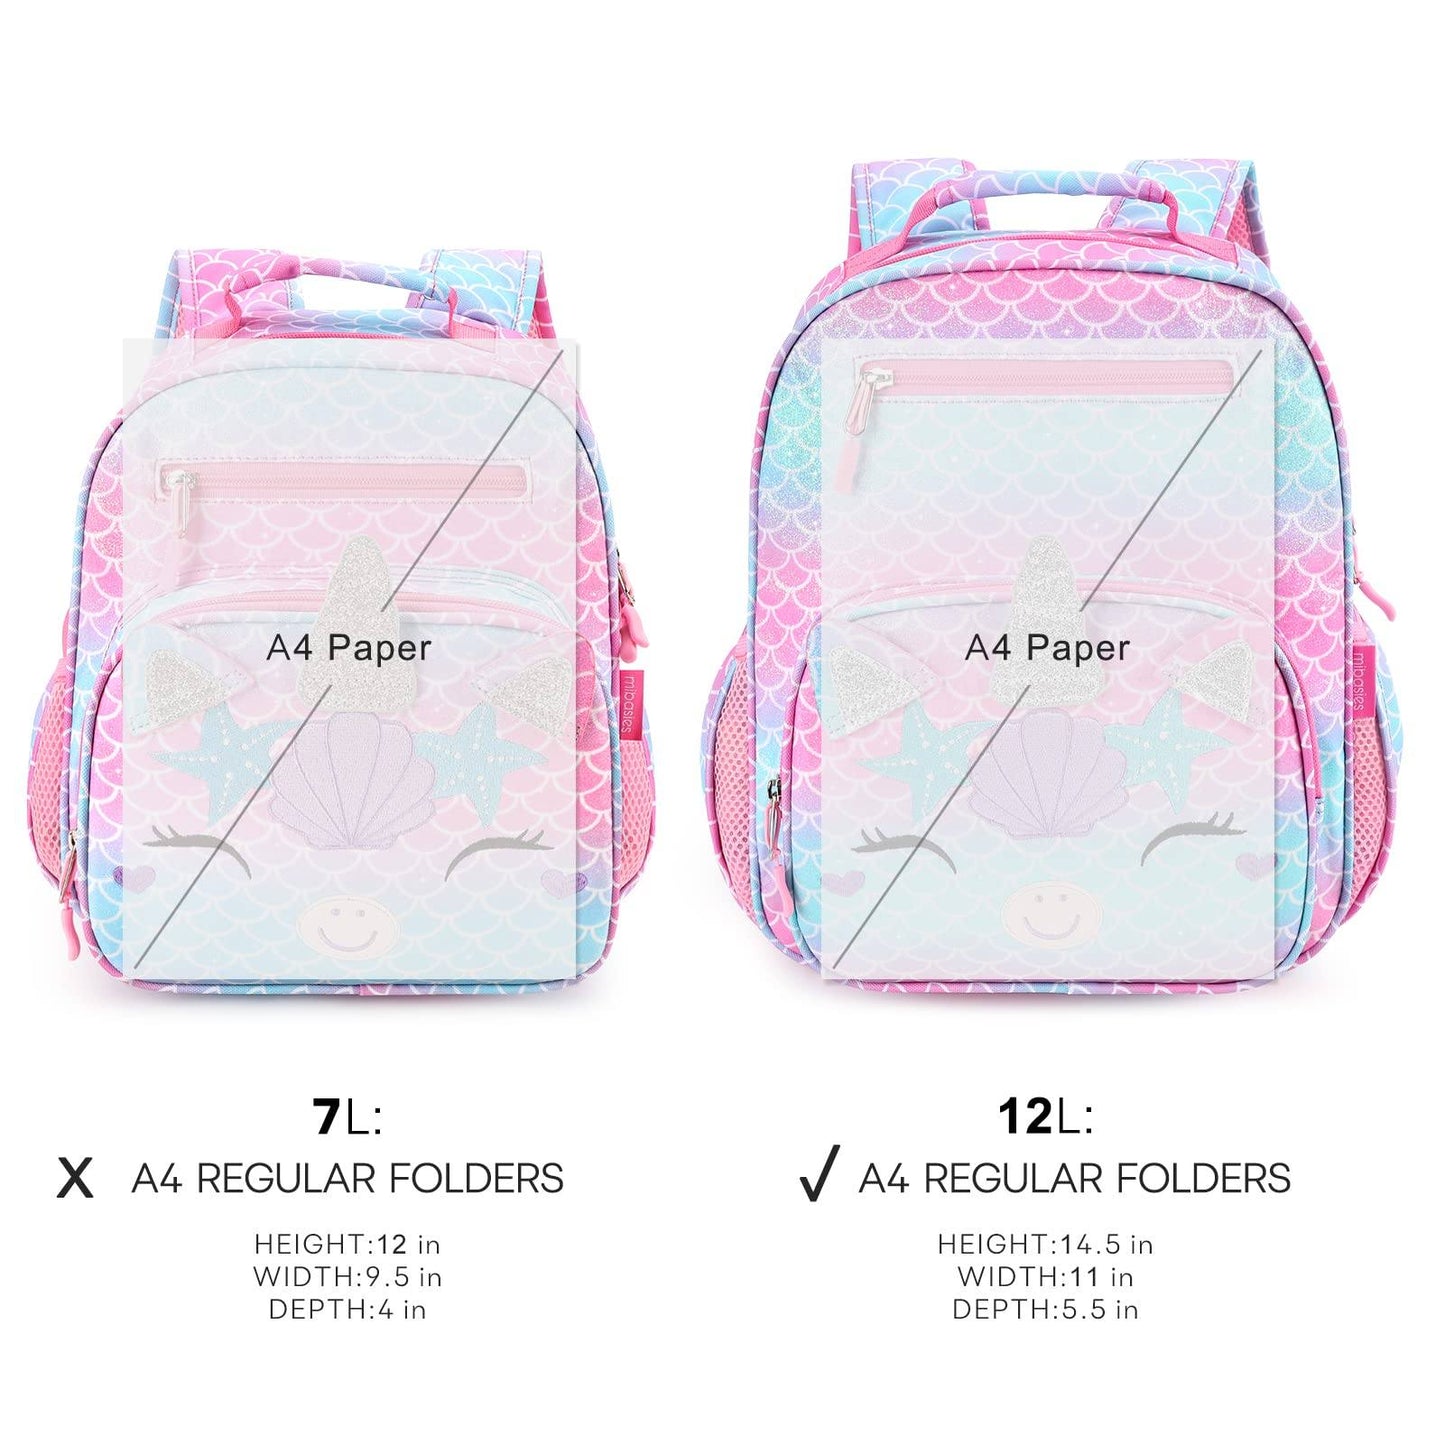 Colorful Unicorn schoolbag Mibasies 